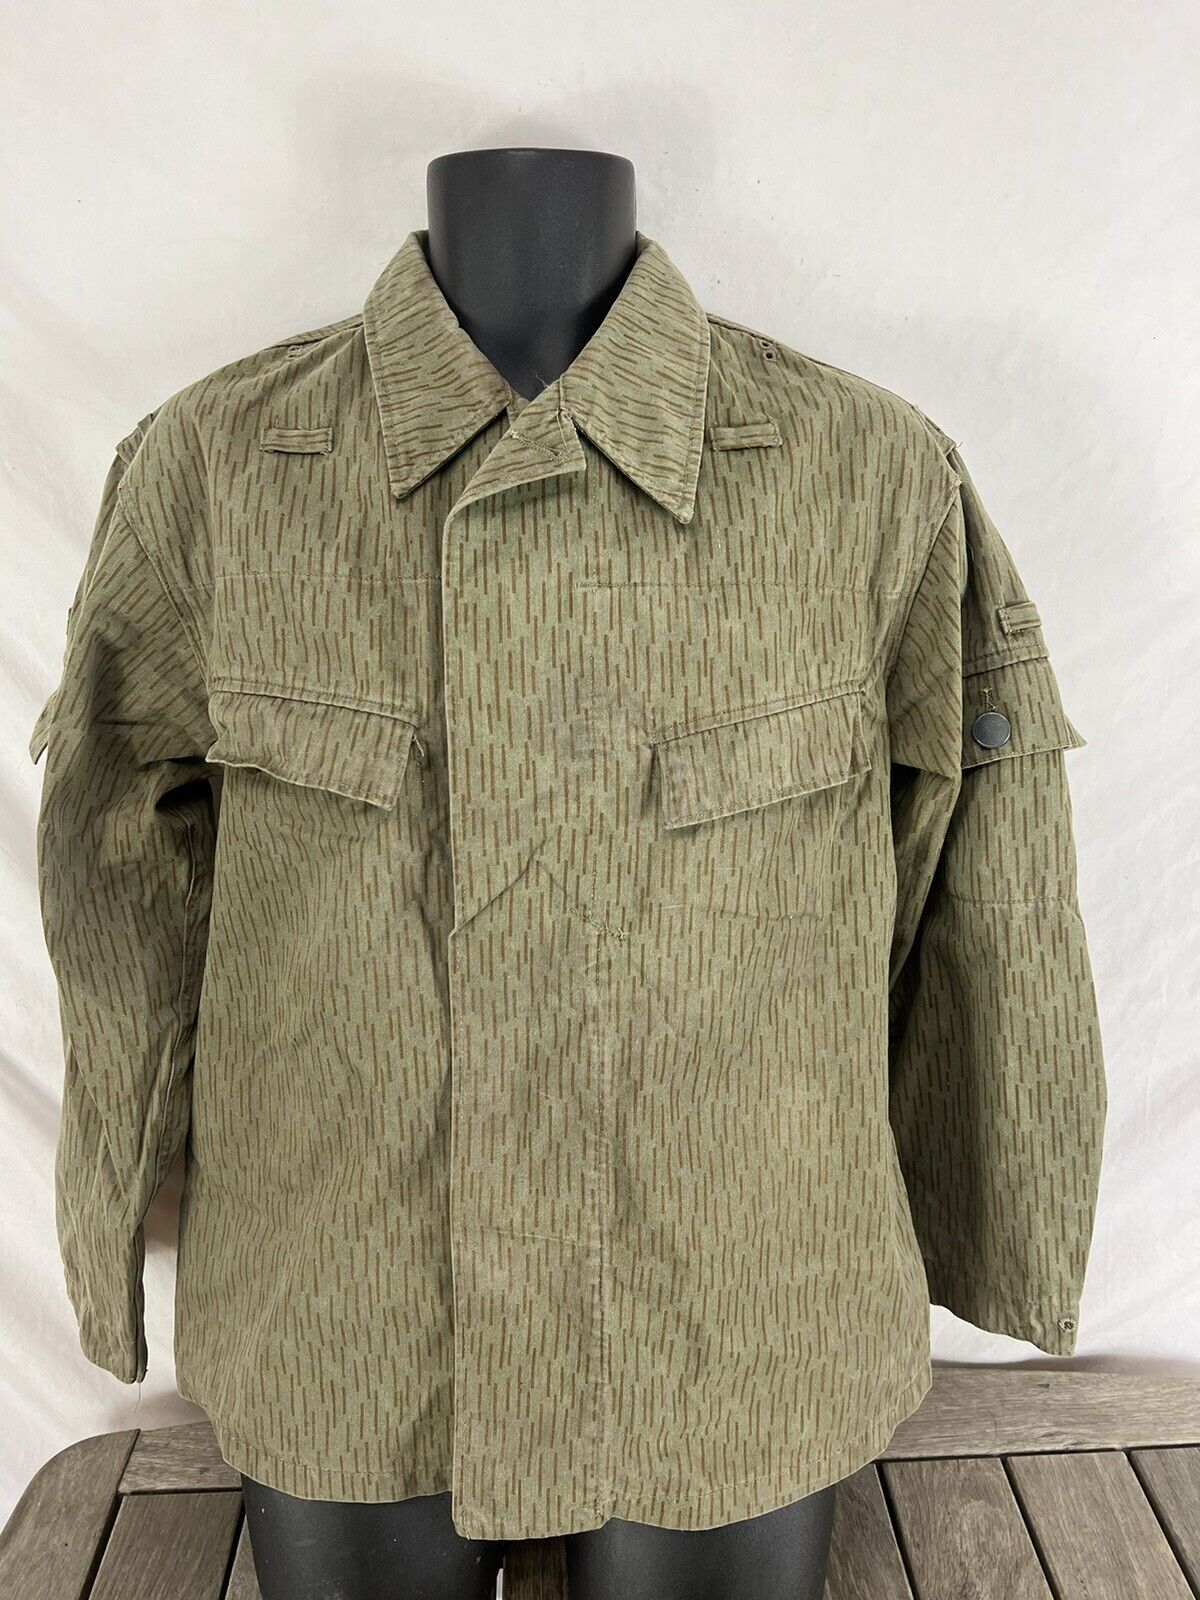 East German Rain Drop Camo Summer Uniform Shirt W/Pistol Pocket Size SK-48 Med.